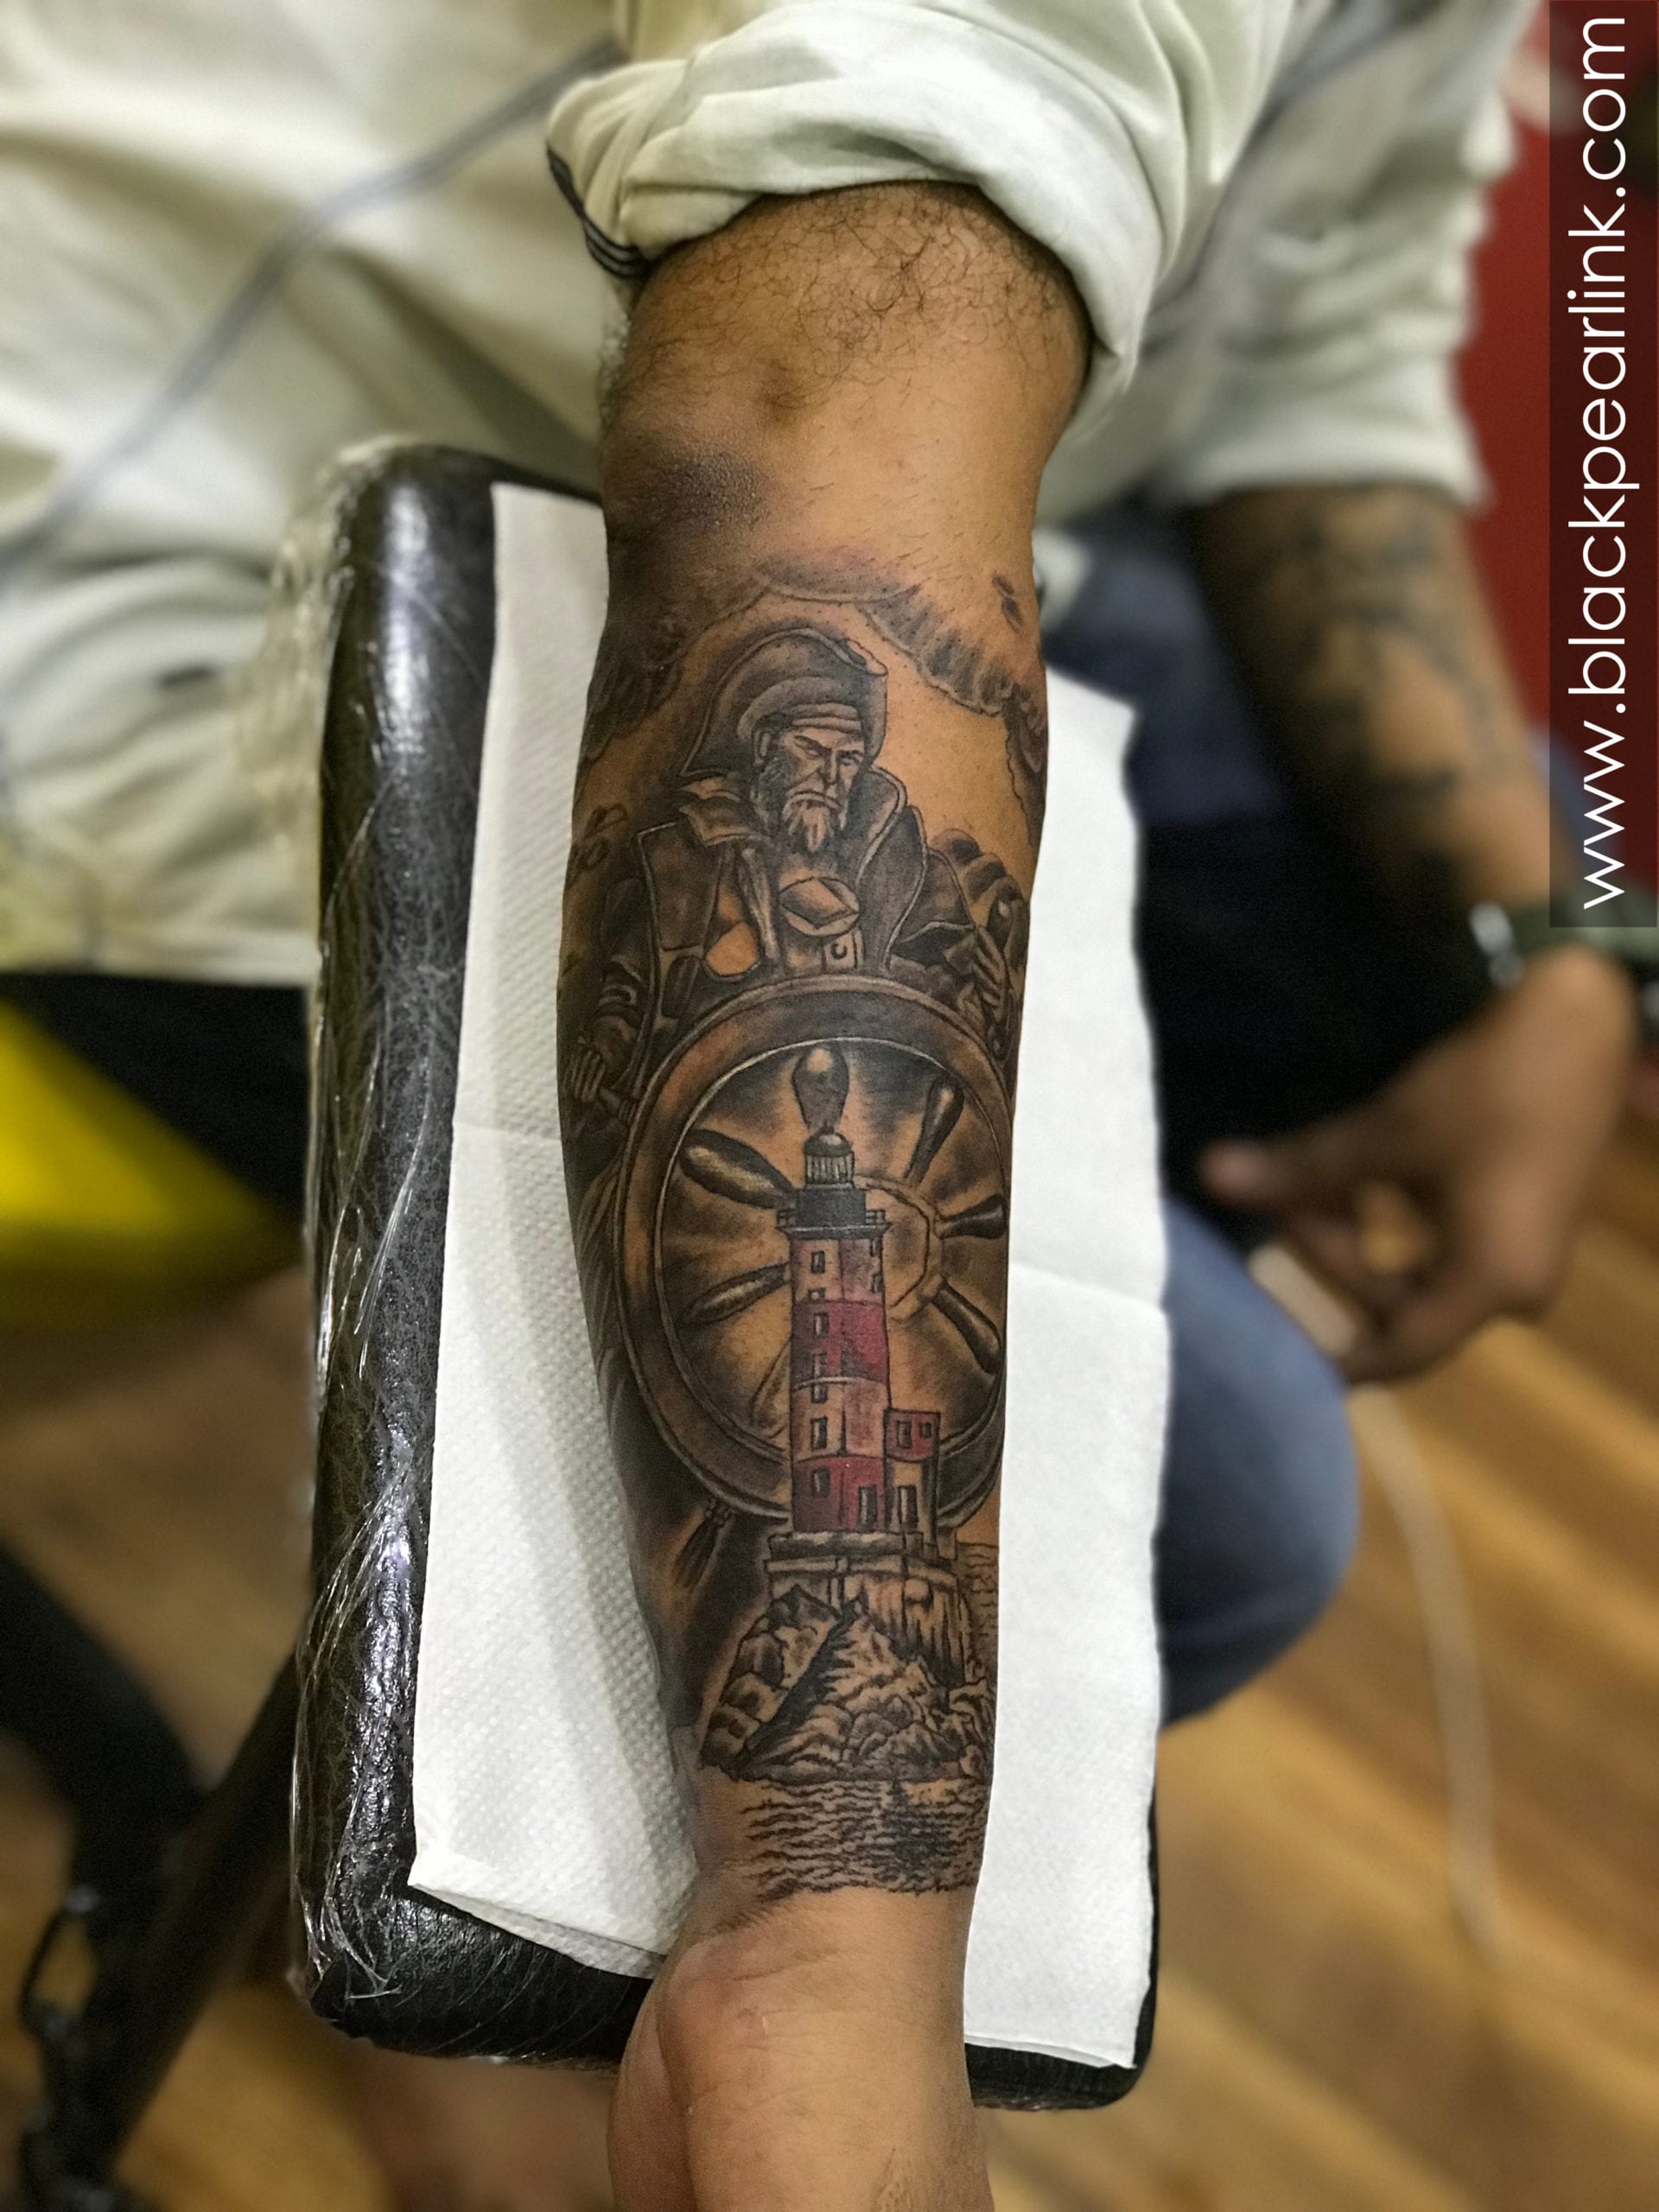 Chatrapati Shivaji Maharaj Tattoo by Javagreeen on DeviantArt